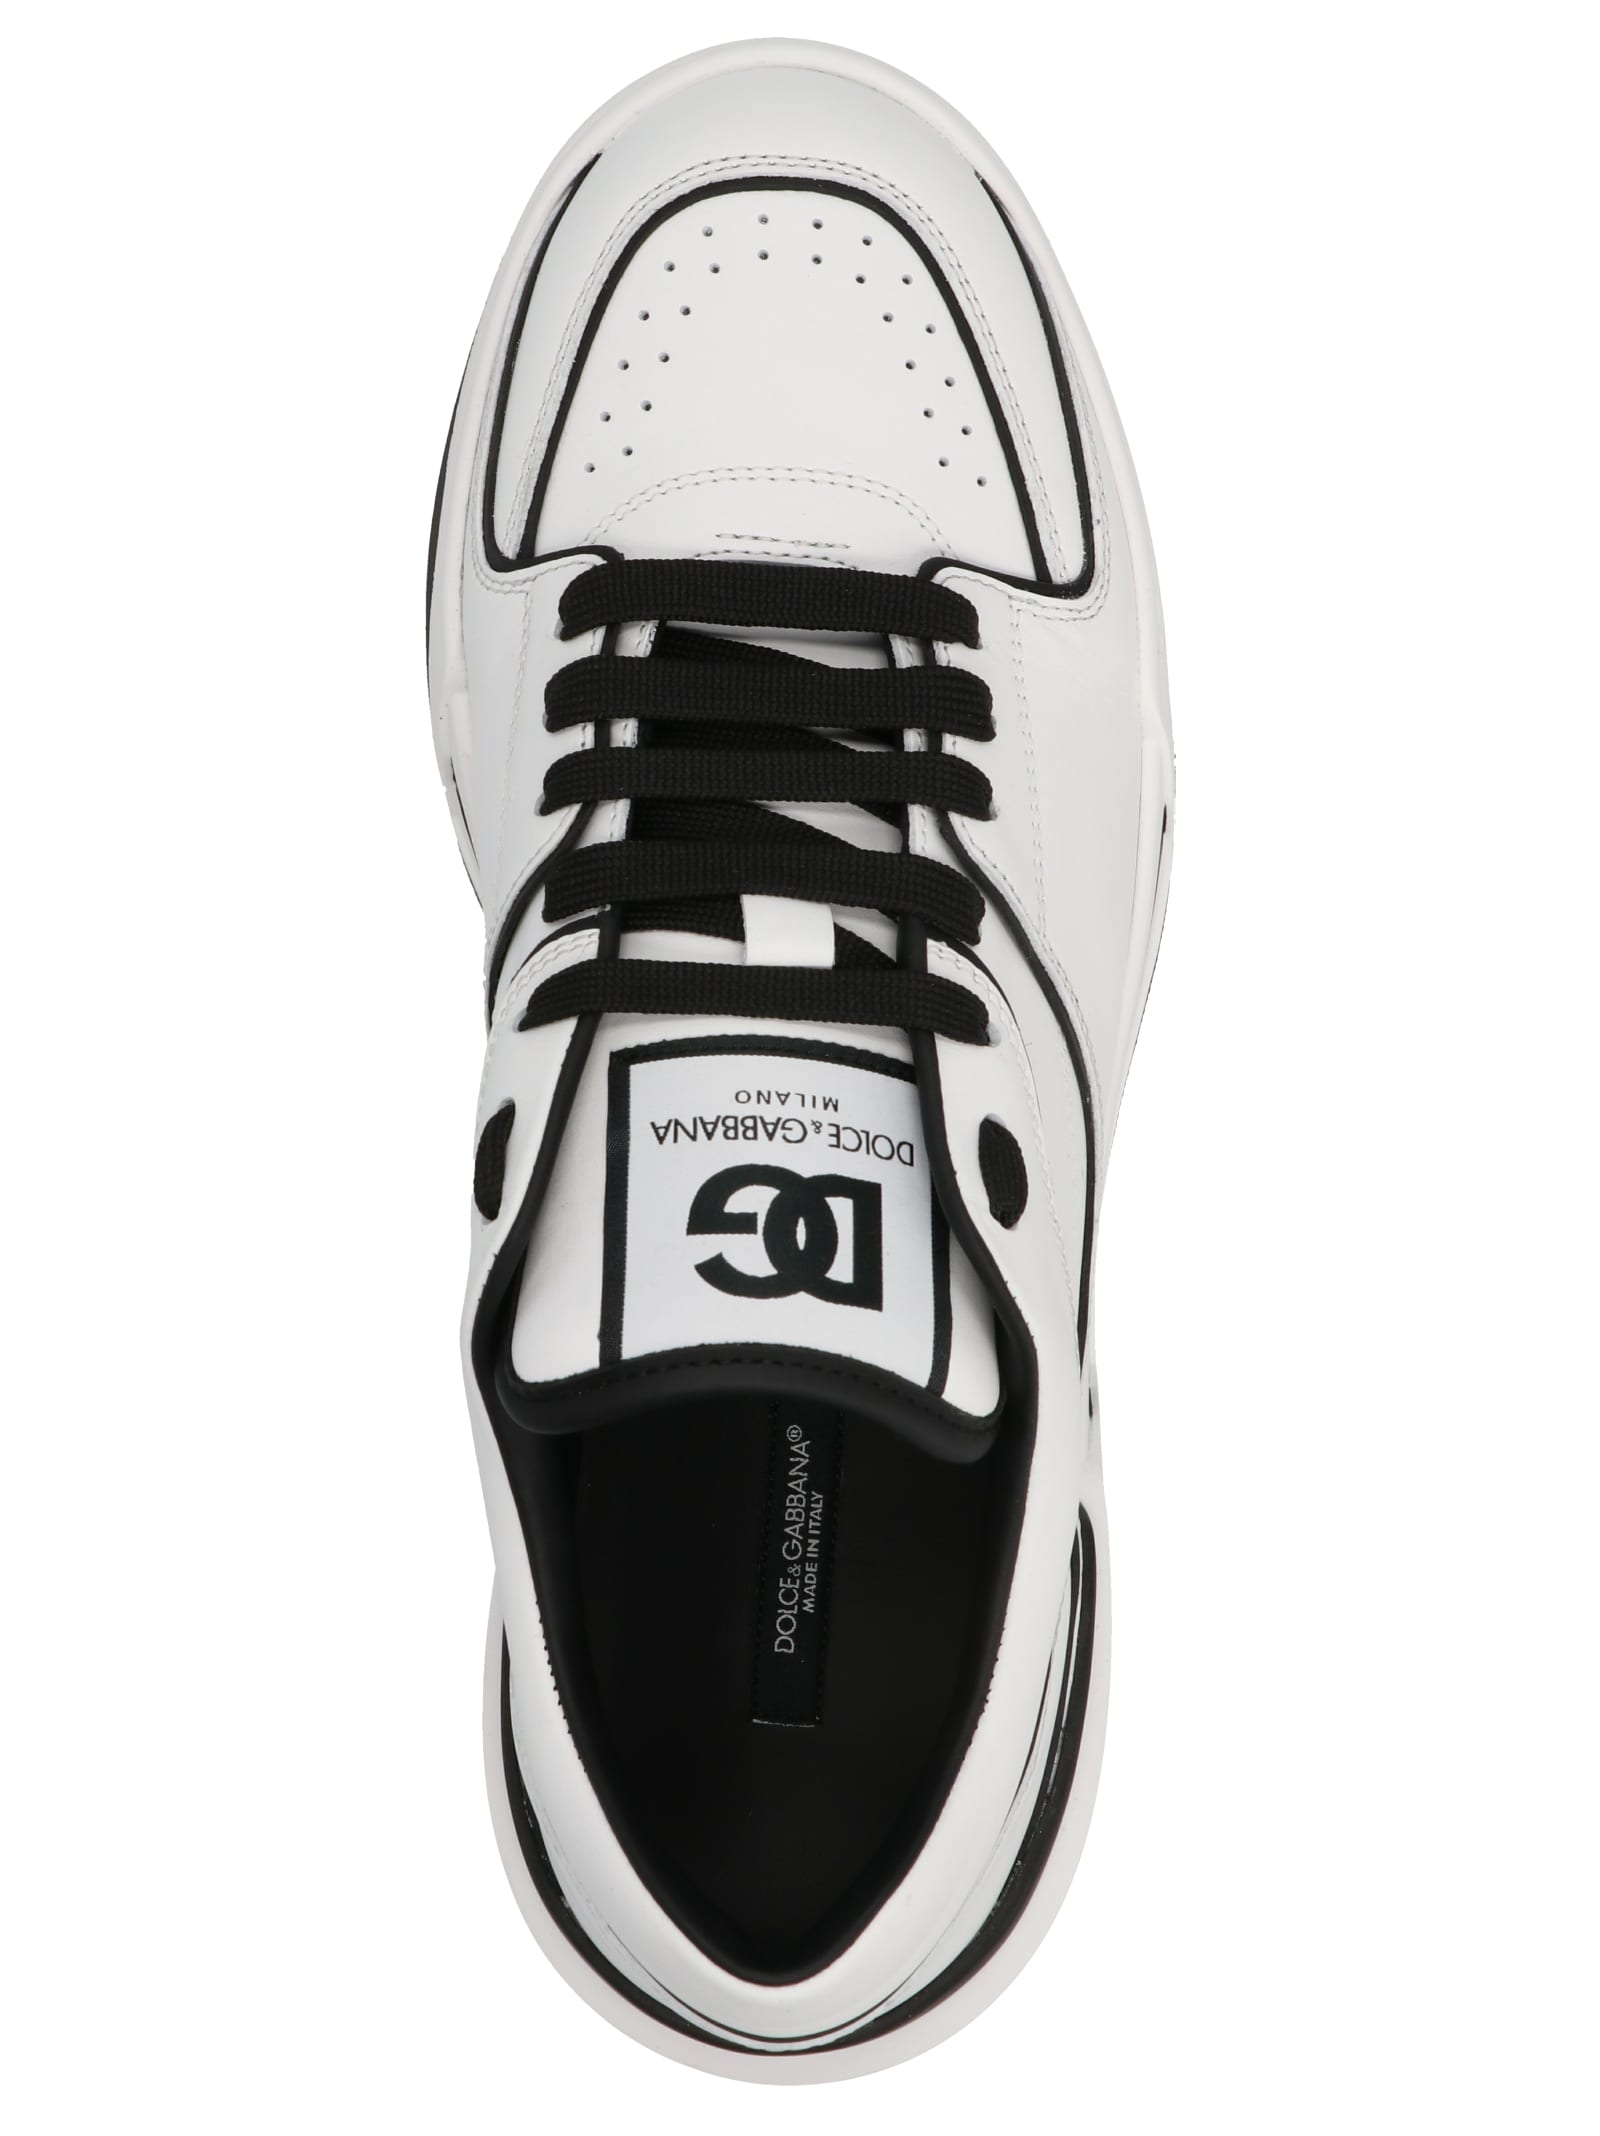 Shop Dolce & Gabbana New Roma Sneakers In White/black